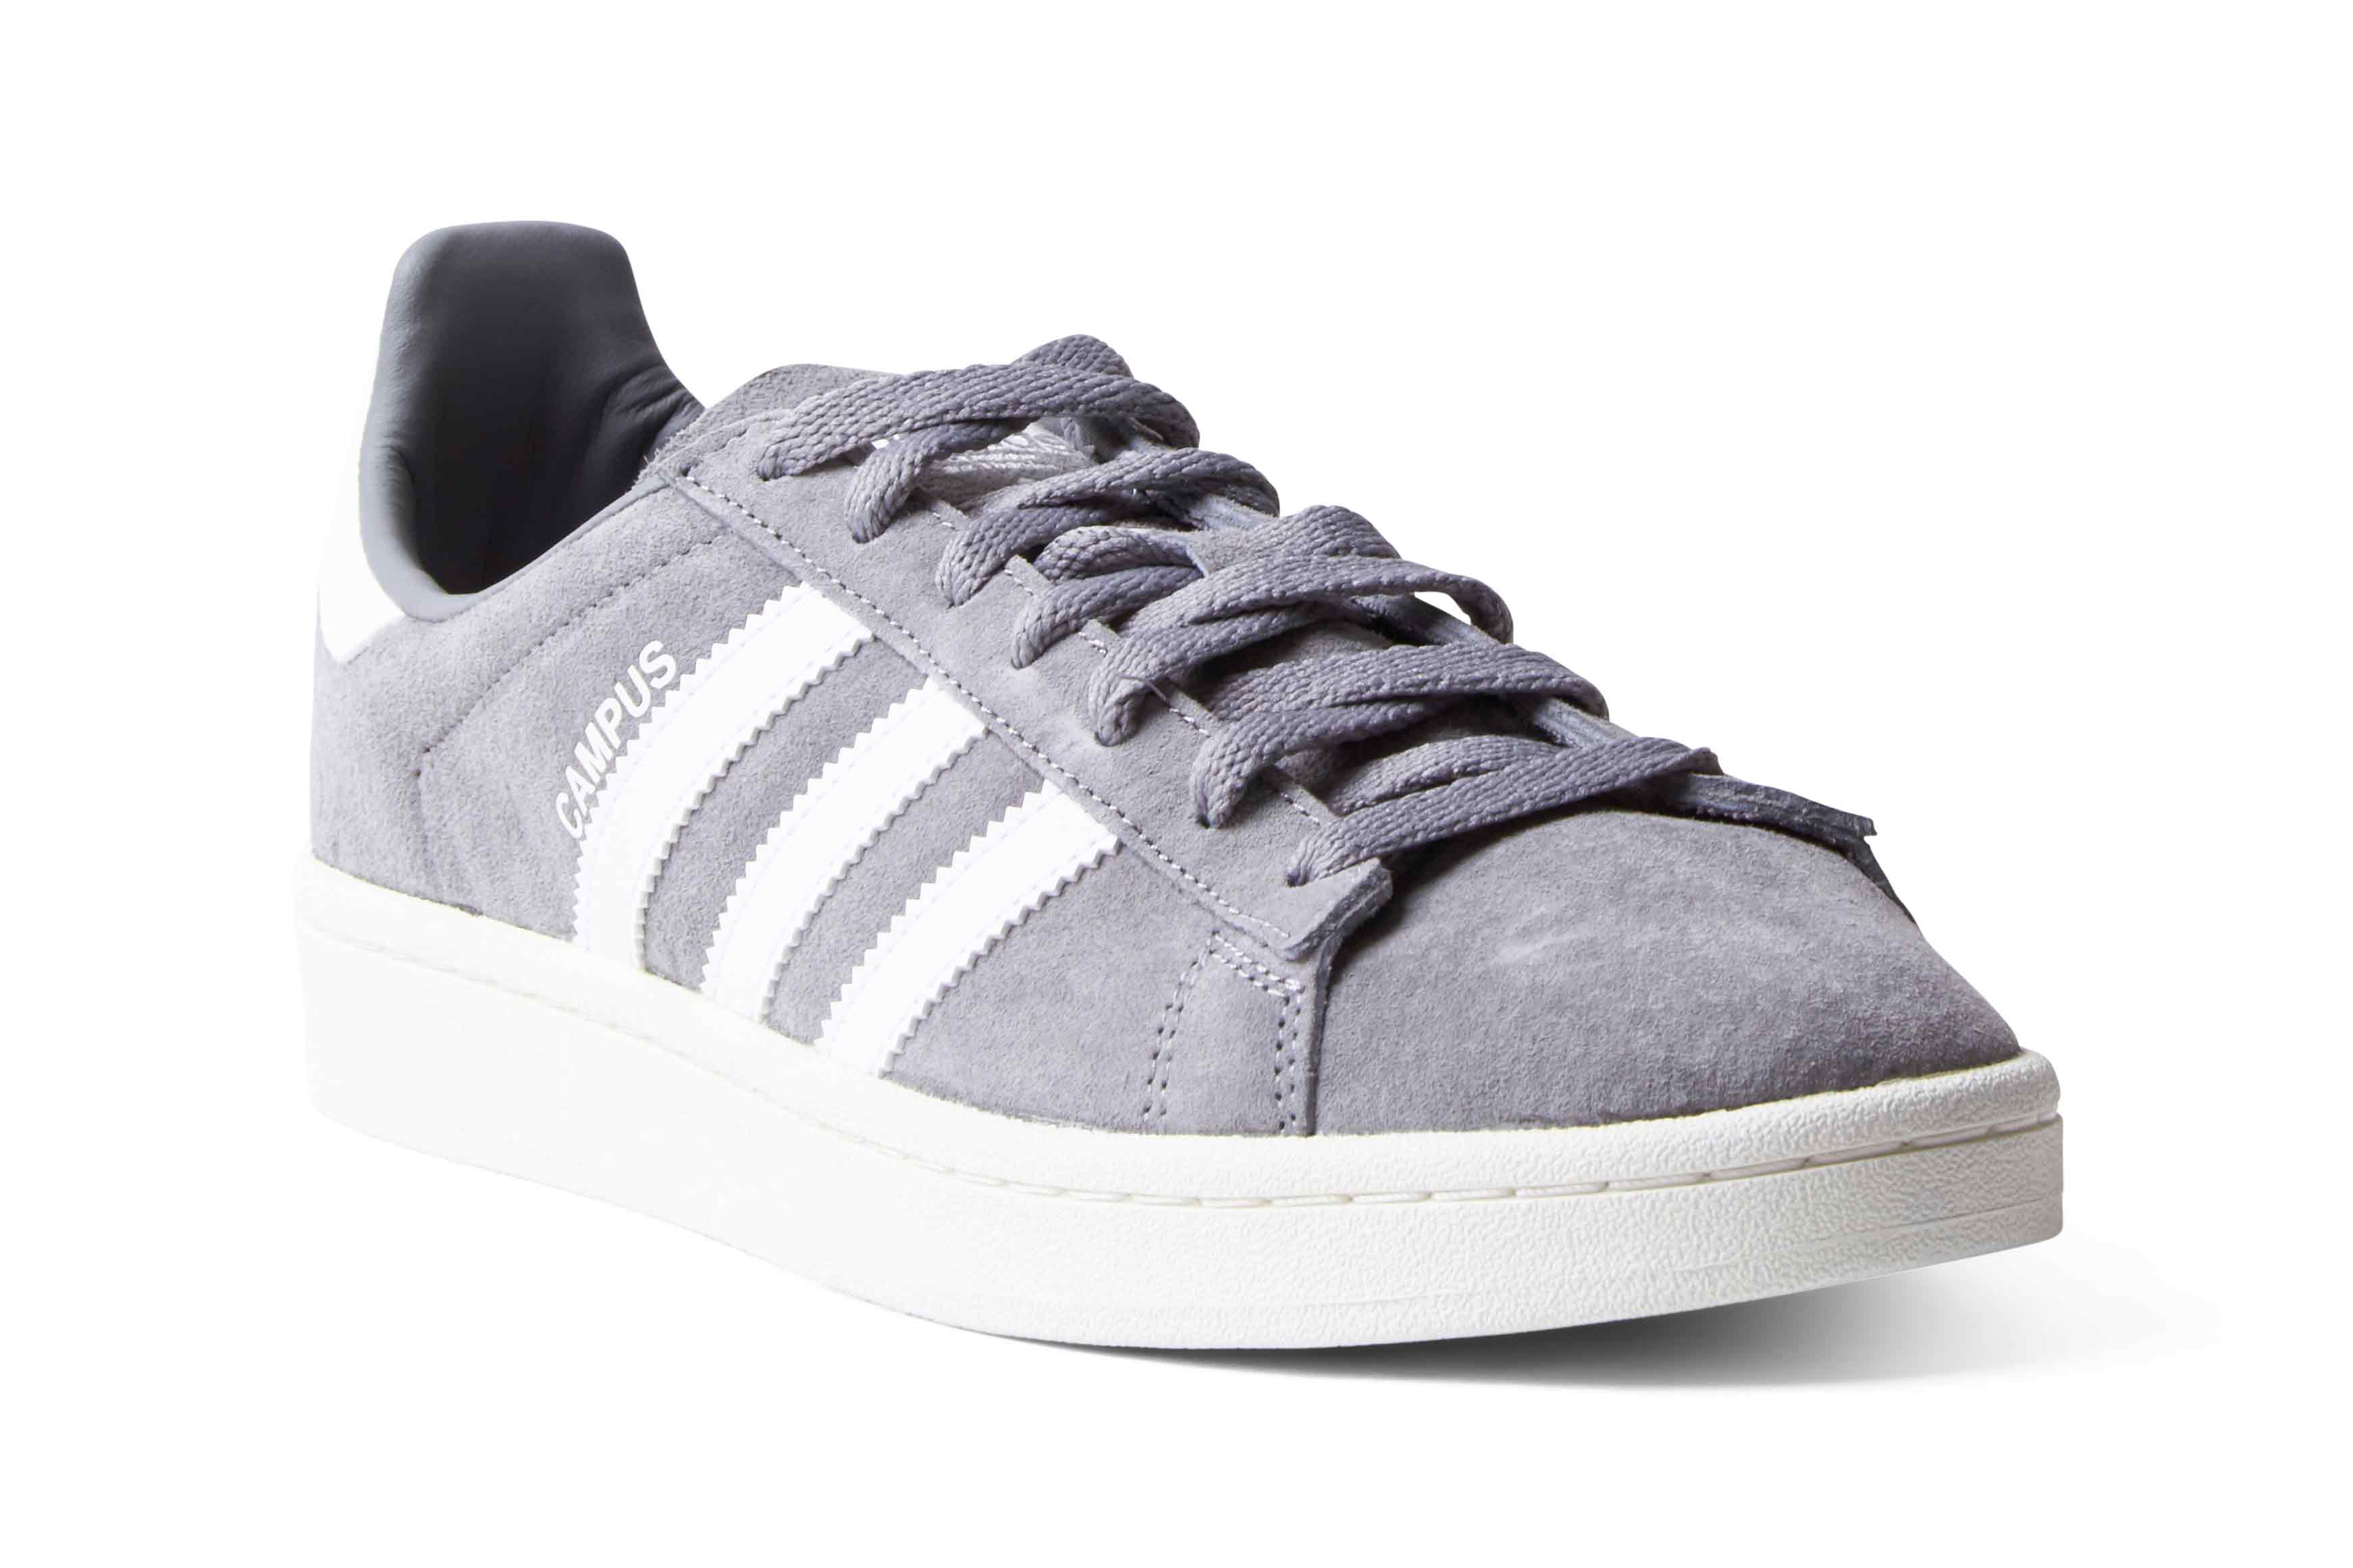 Adidas Campus - Grey/Footwear White/Chalk White